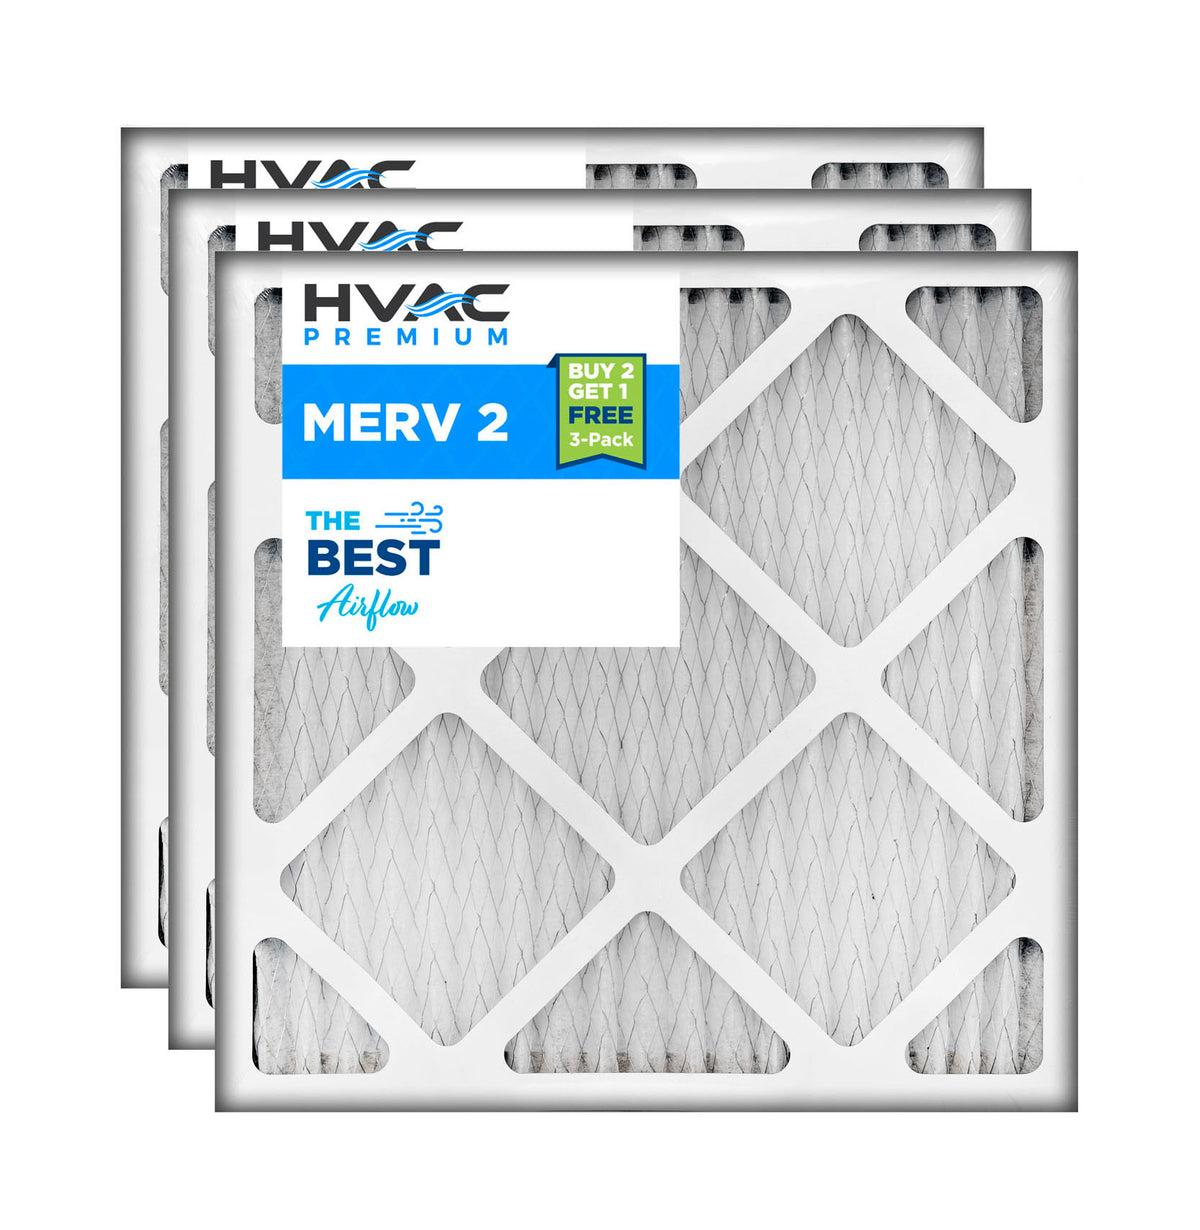 10 x 10 Merv 2 HVAC Pleated Filter, 3-Pack